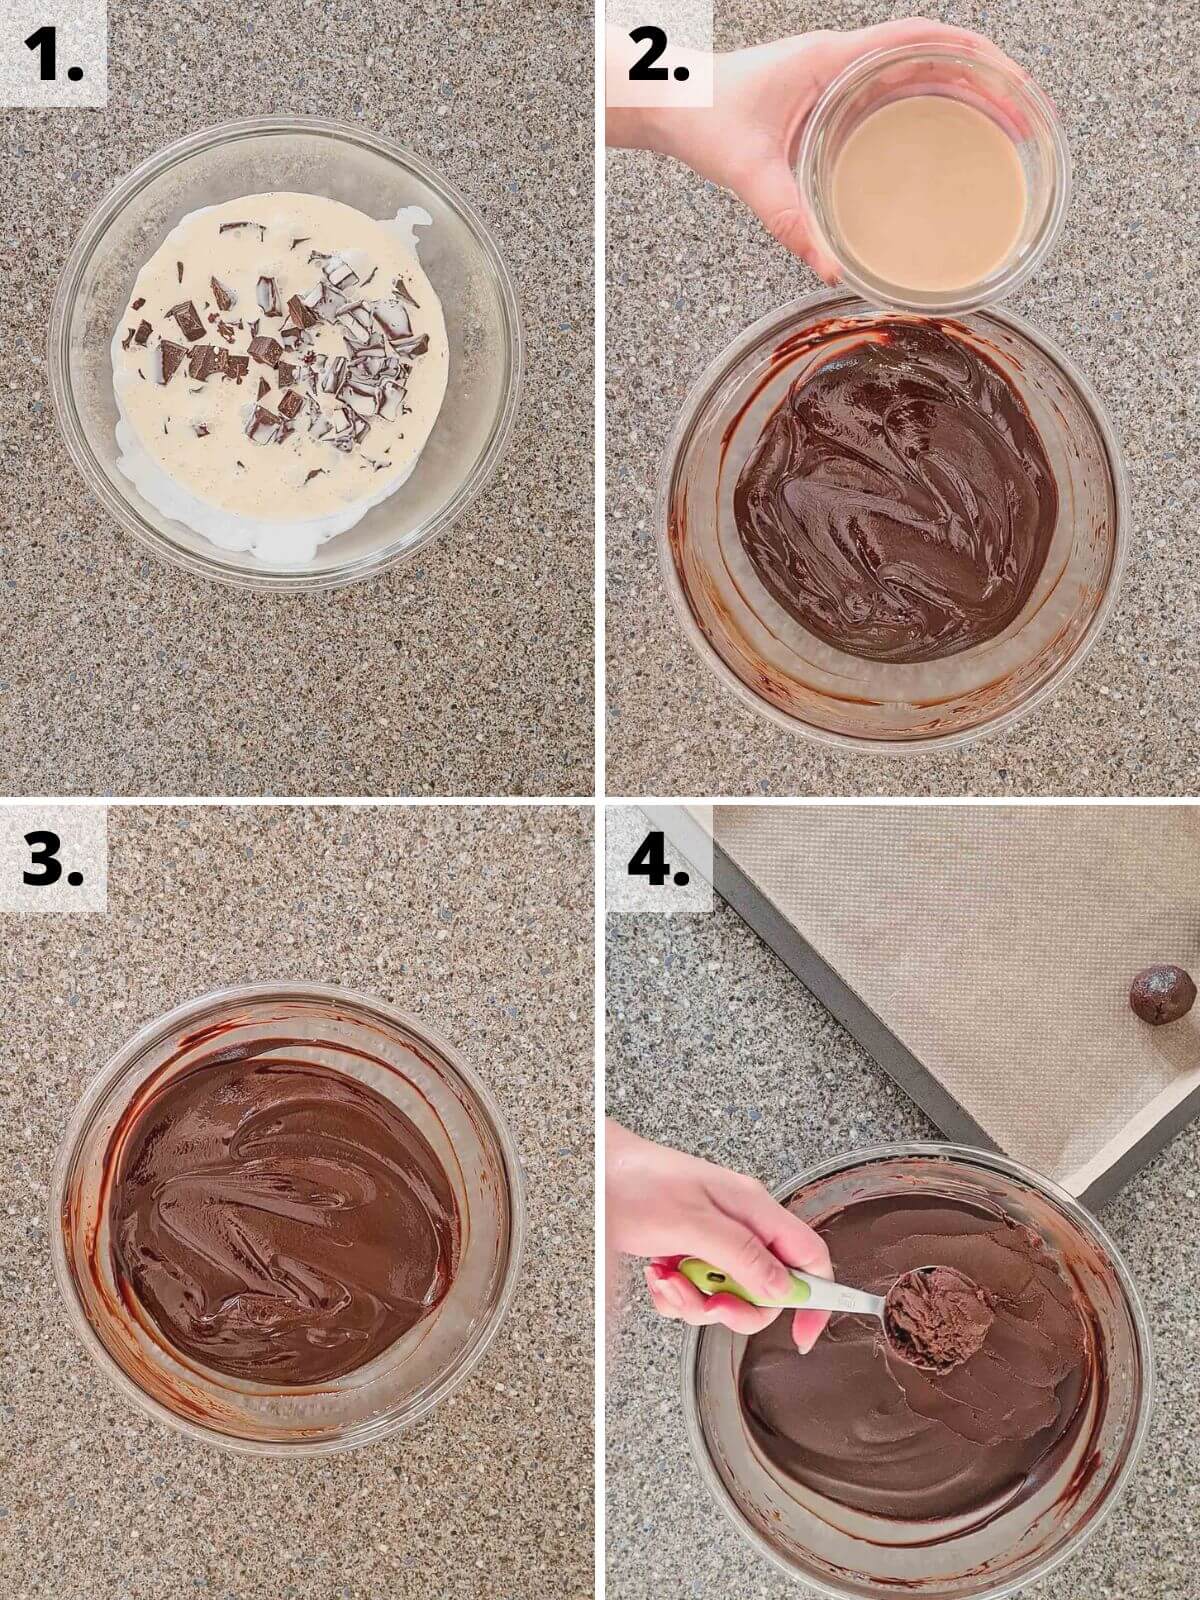 baileys irish cream chocolate truffles recipe method steps 1 to 4